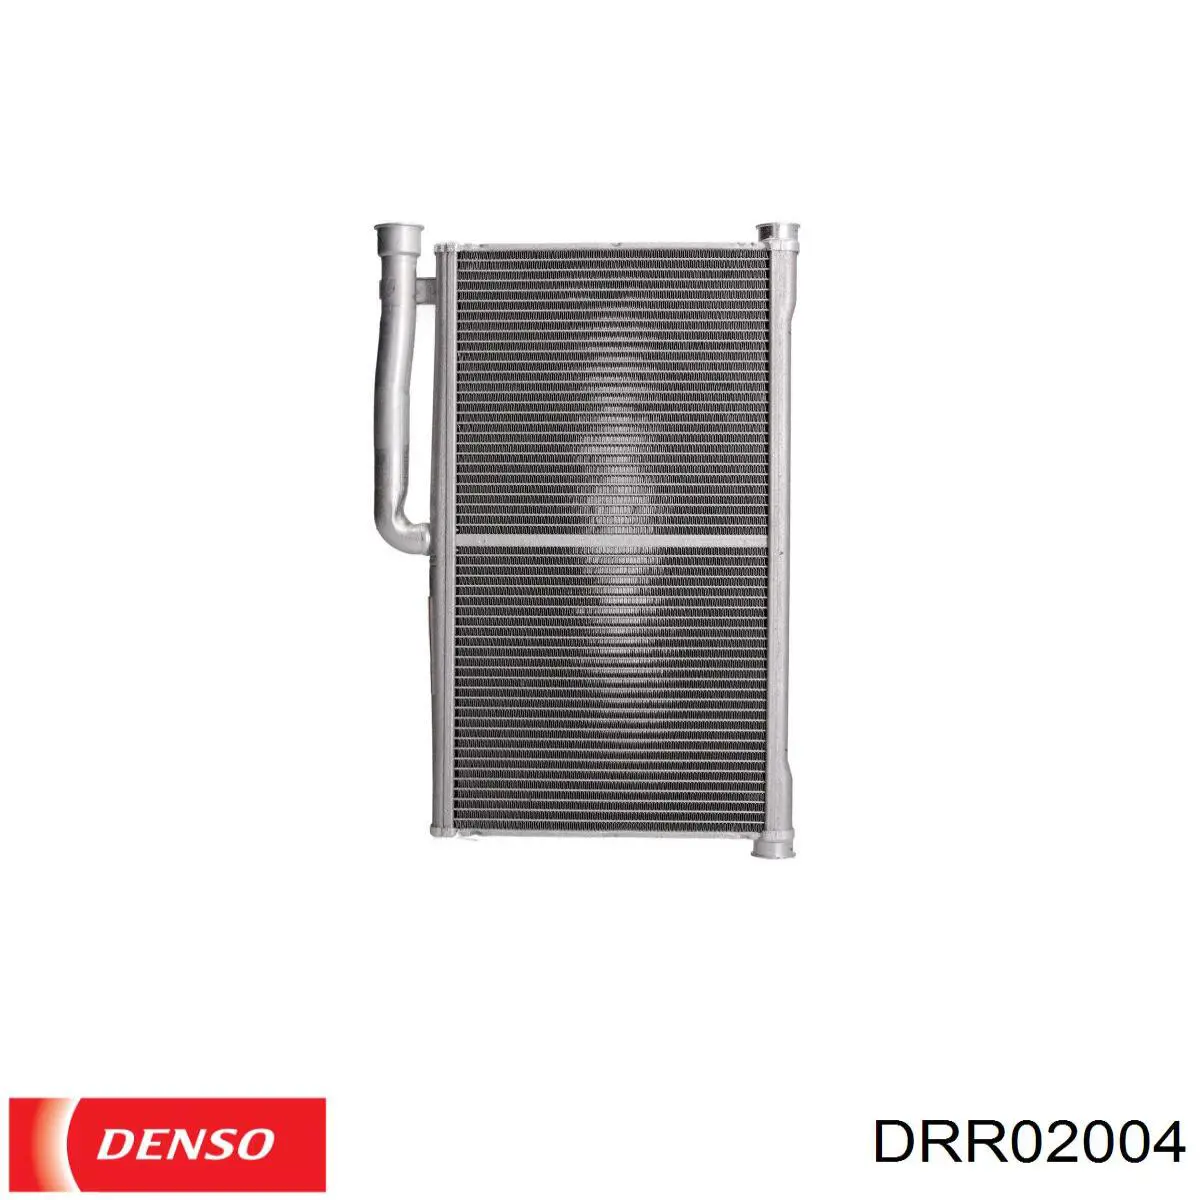 DRR02004 Denso радиатор печки